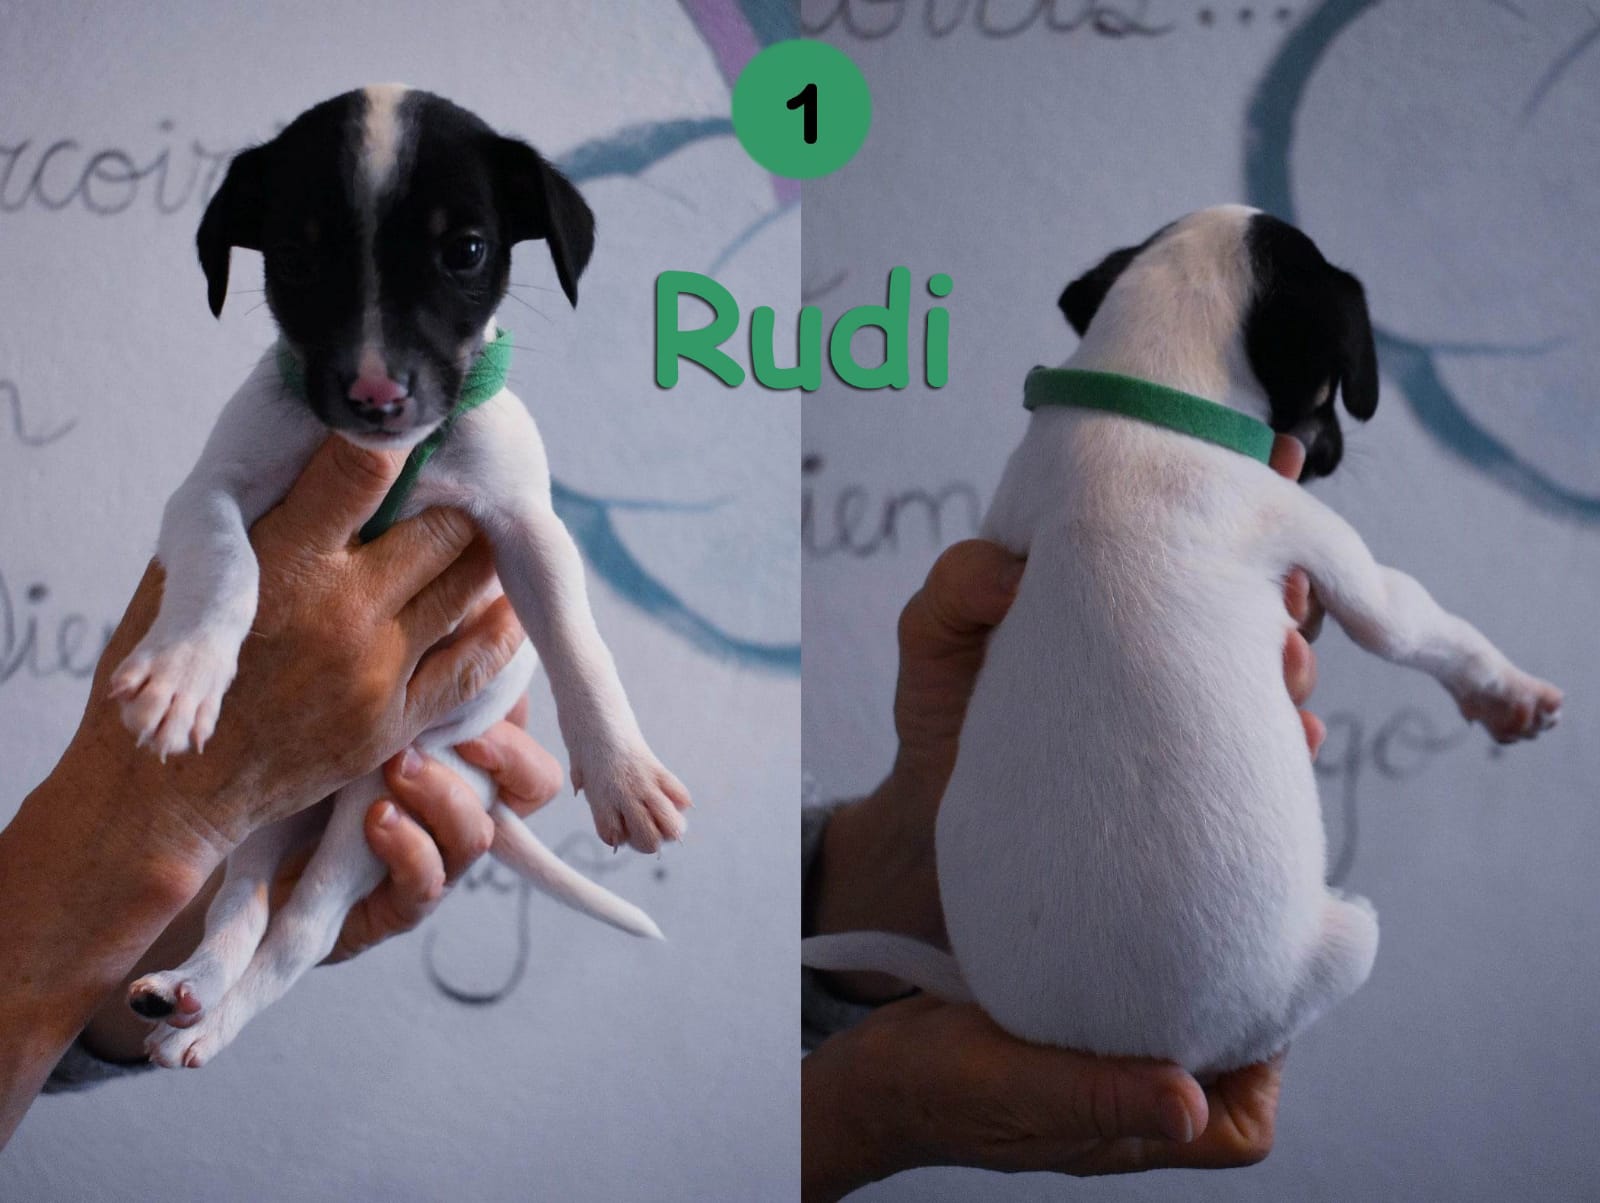 Rudi.jpg